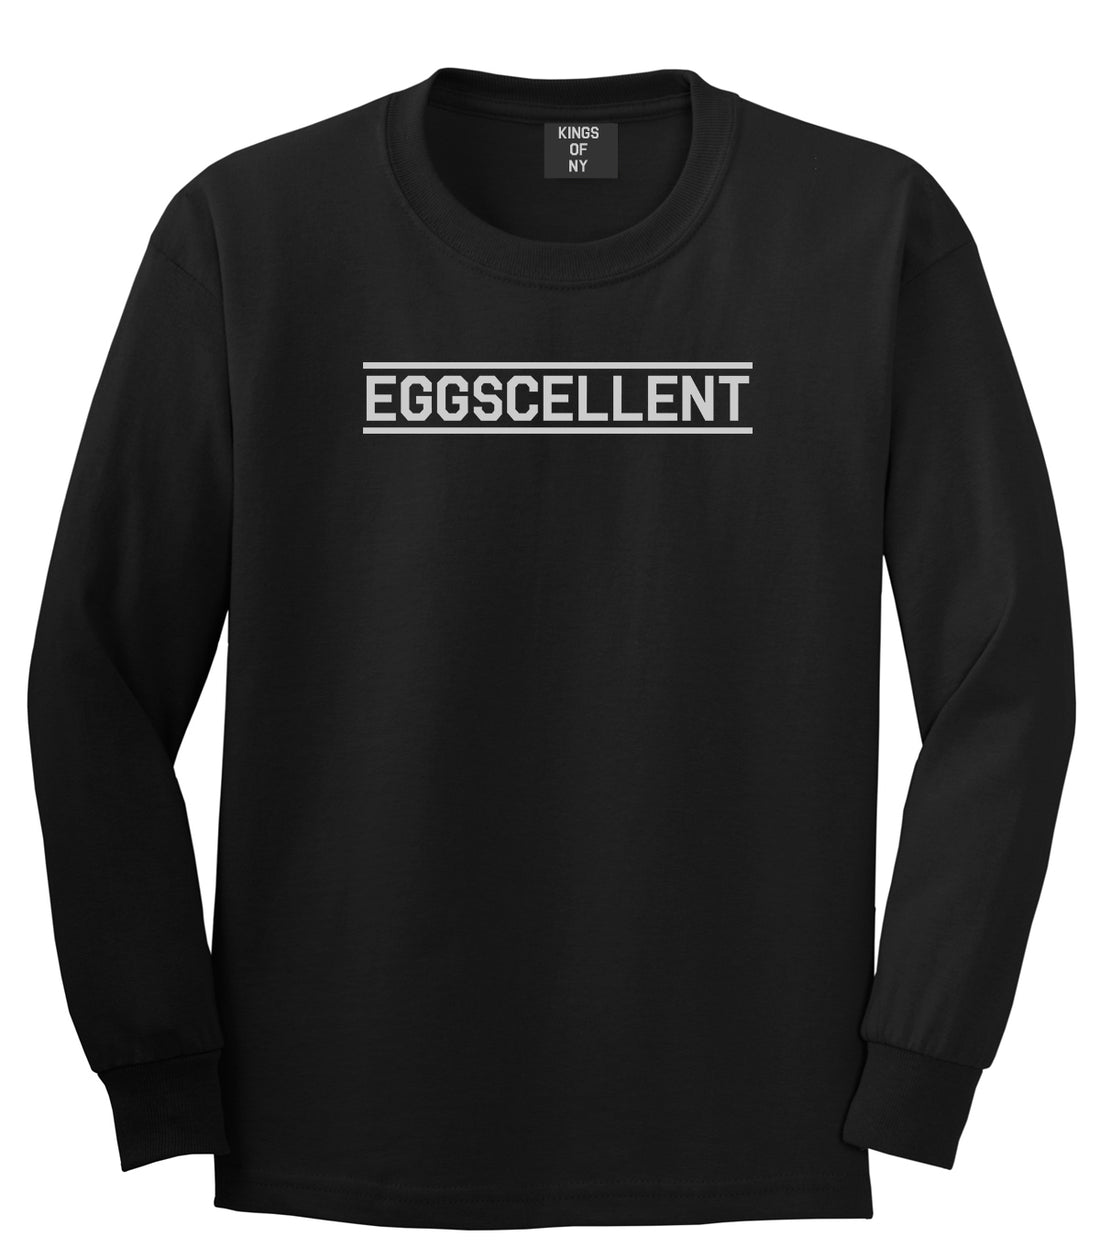 Eggscellent Funny Mens Black Long Sleeve T-Shirt by Kings Of NY